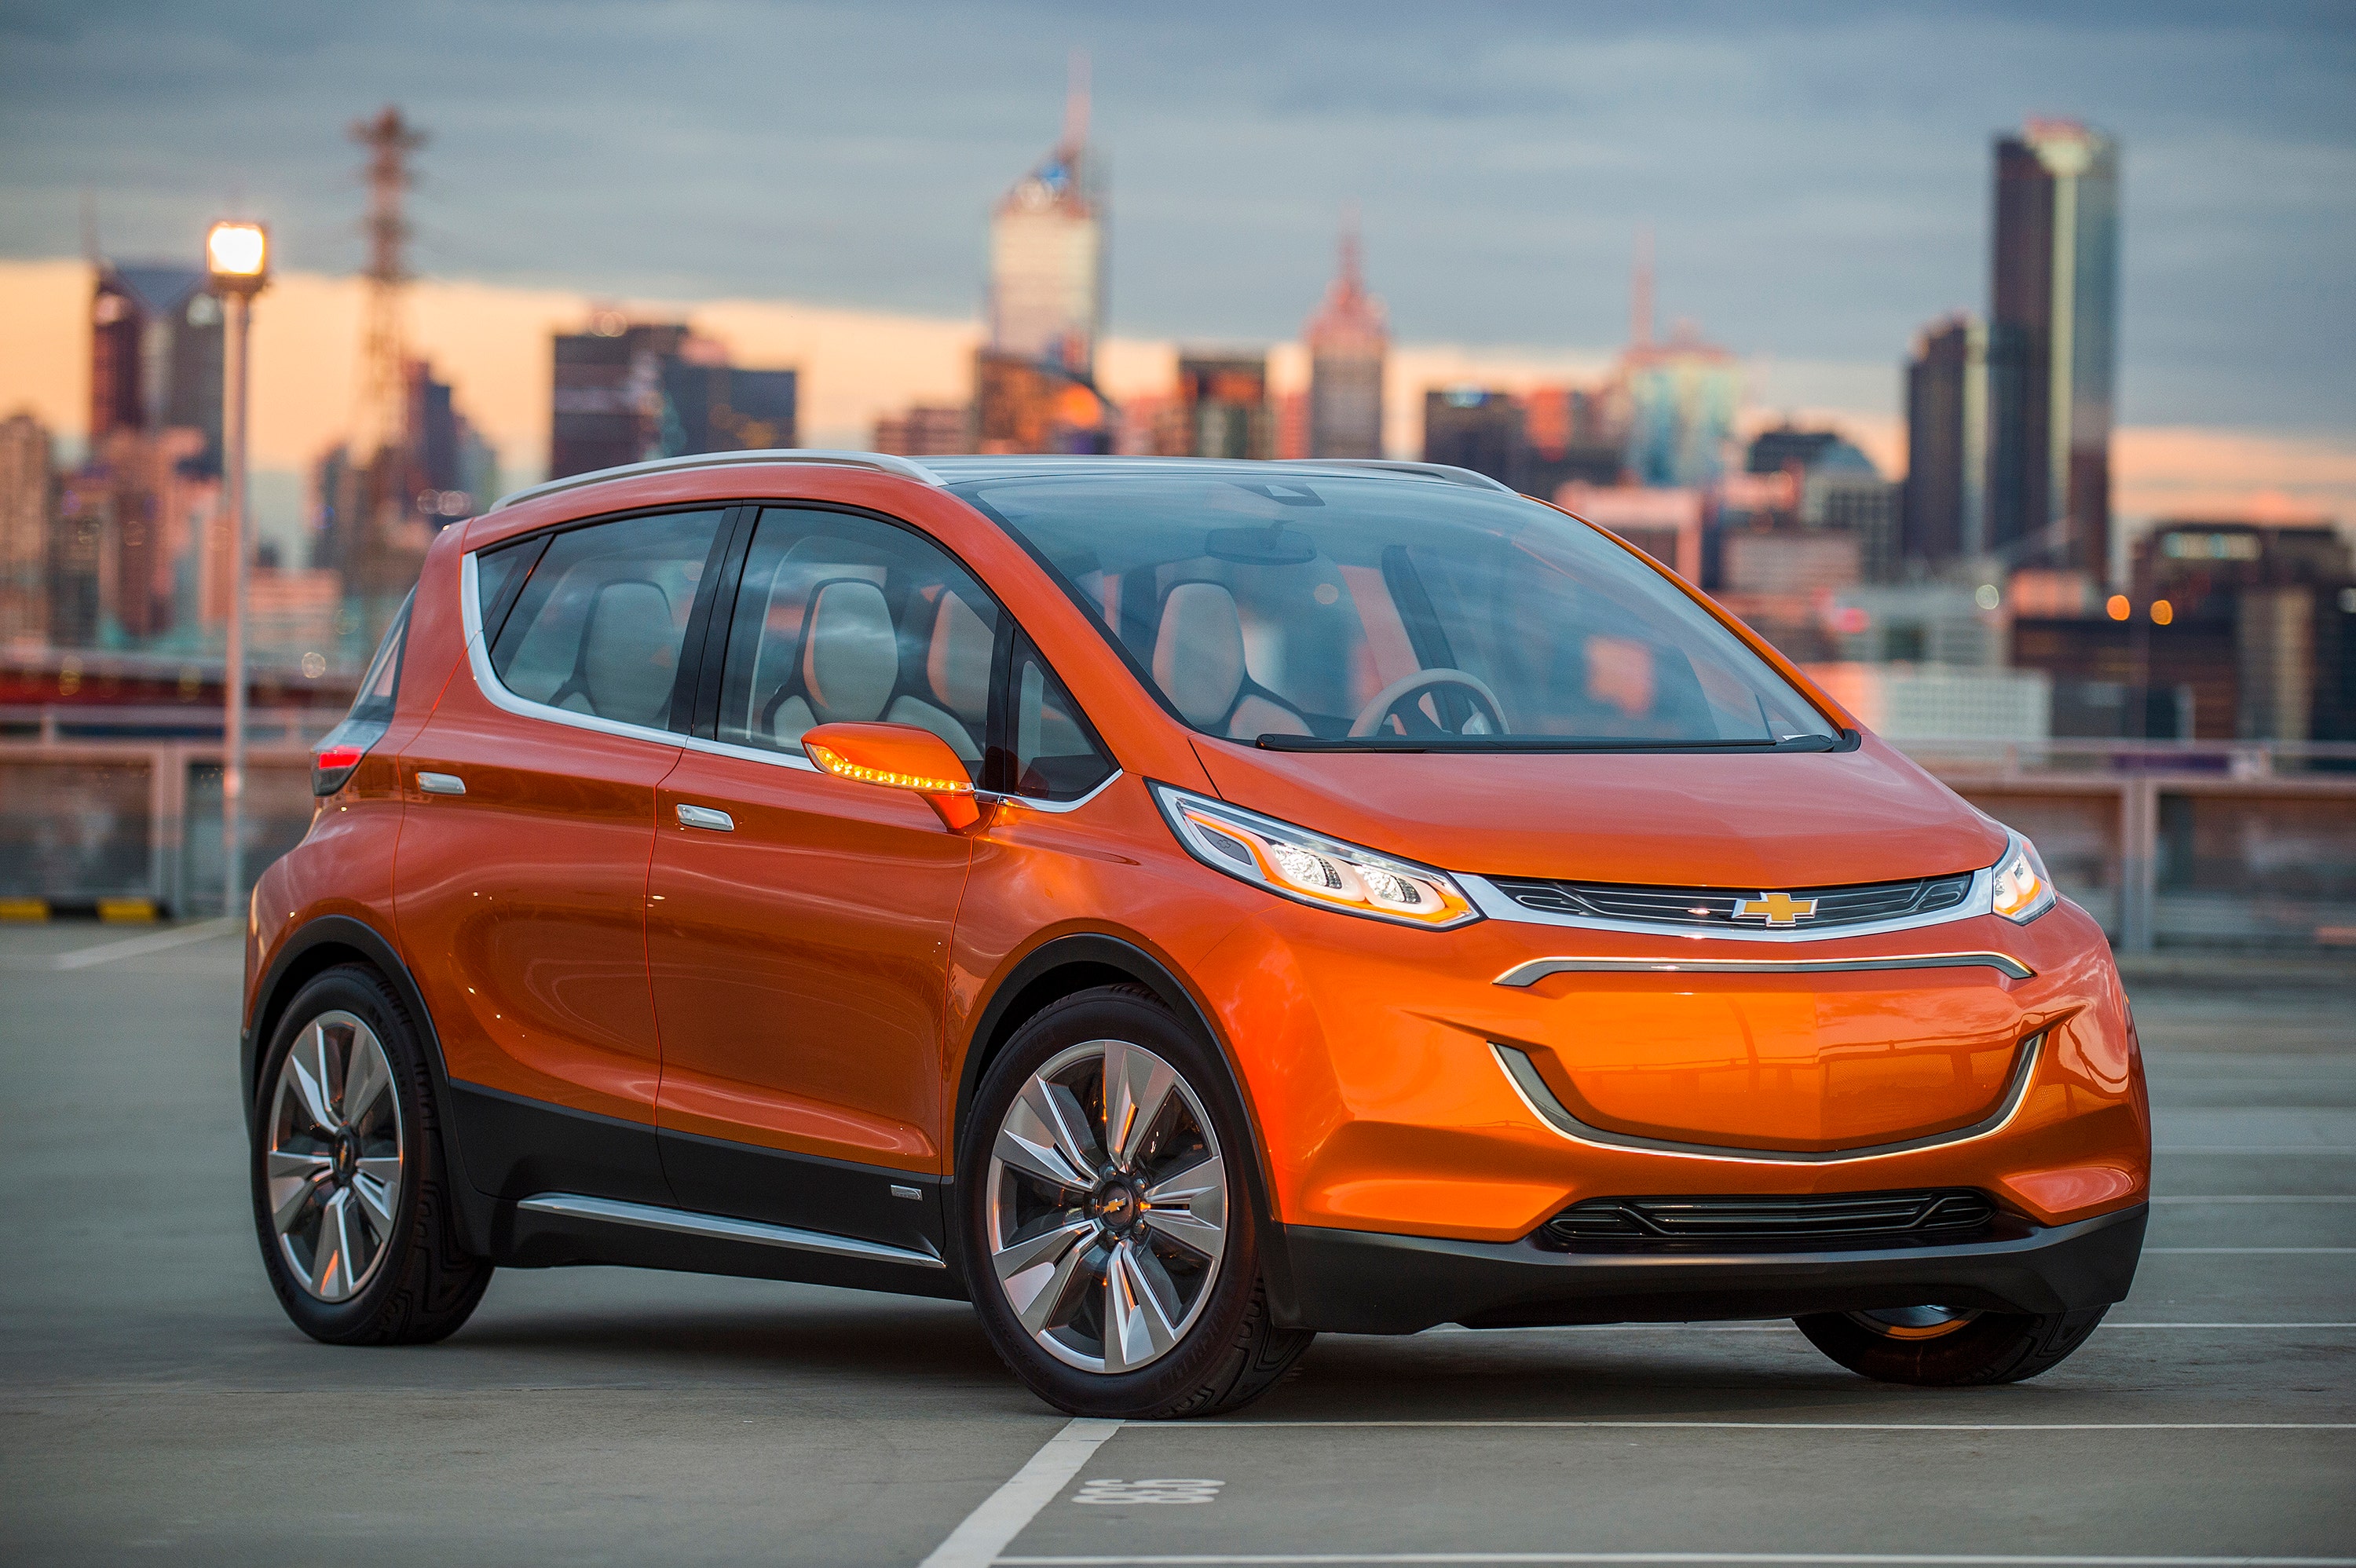 General Motors Recalls All Chevrolet Bolt EVs To Address Battery-Fire Risks, To Cost $1B